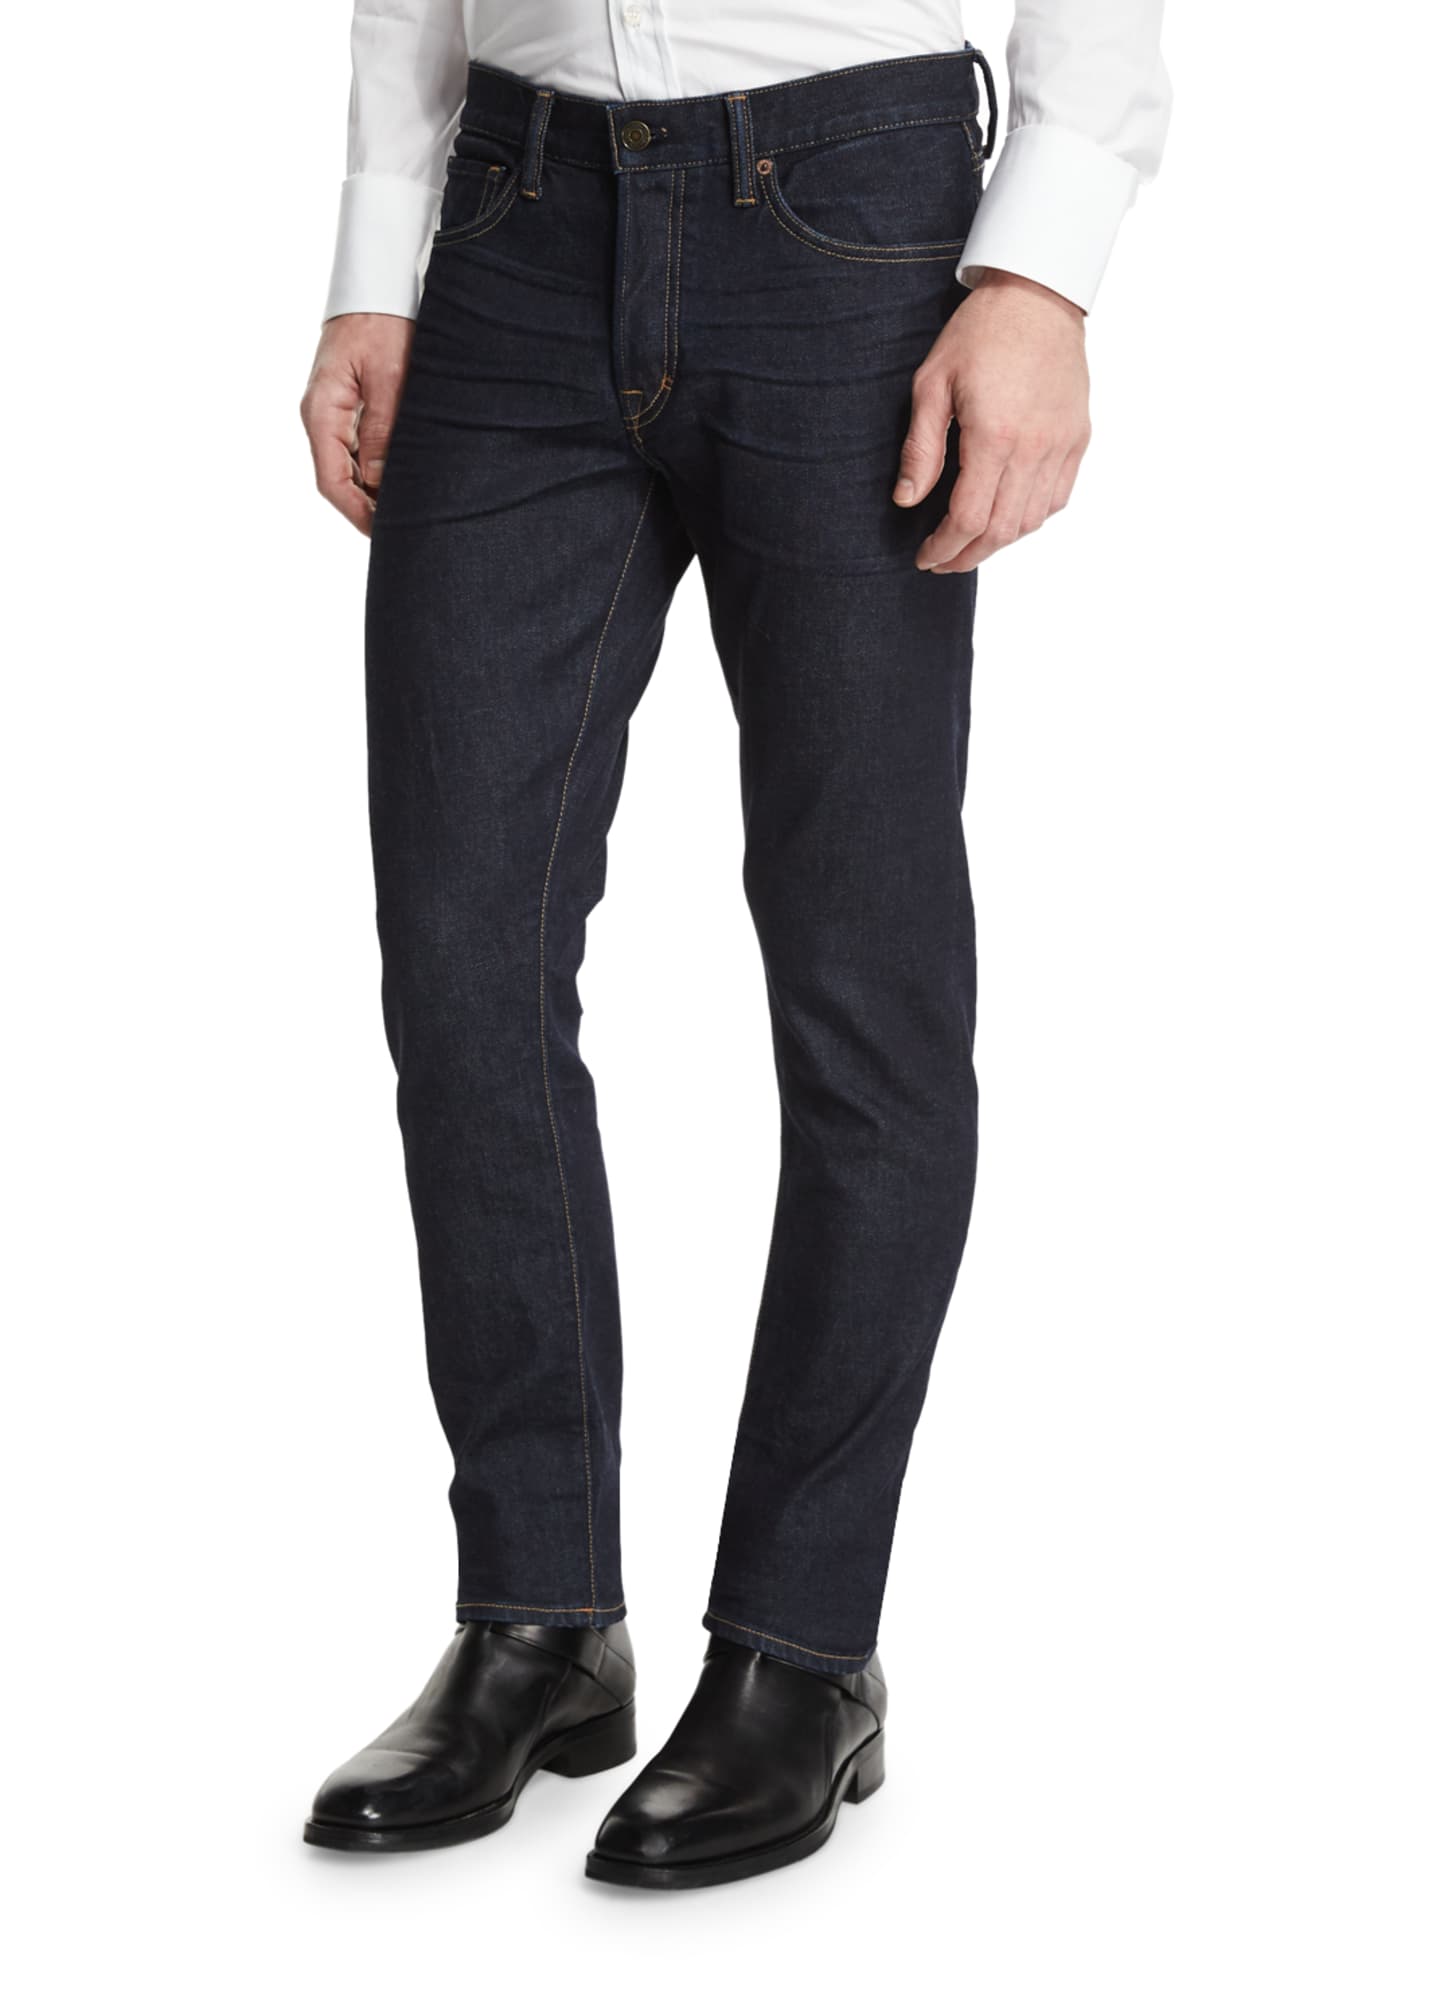 TOM FORD Slim-Fit Stretch Denim Jeans, Indigo - Bergdorf